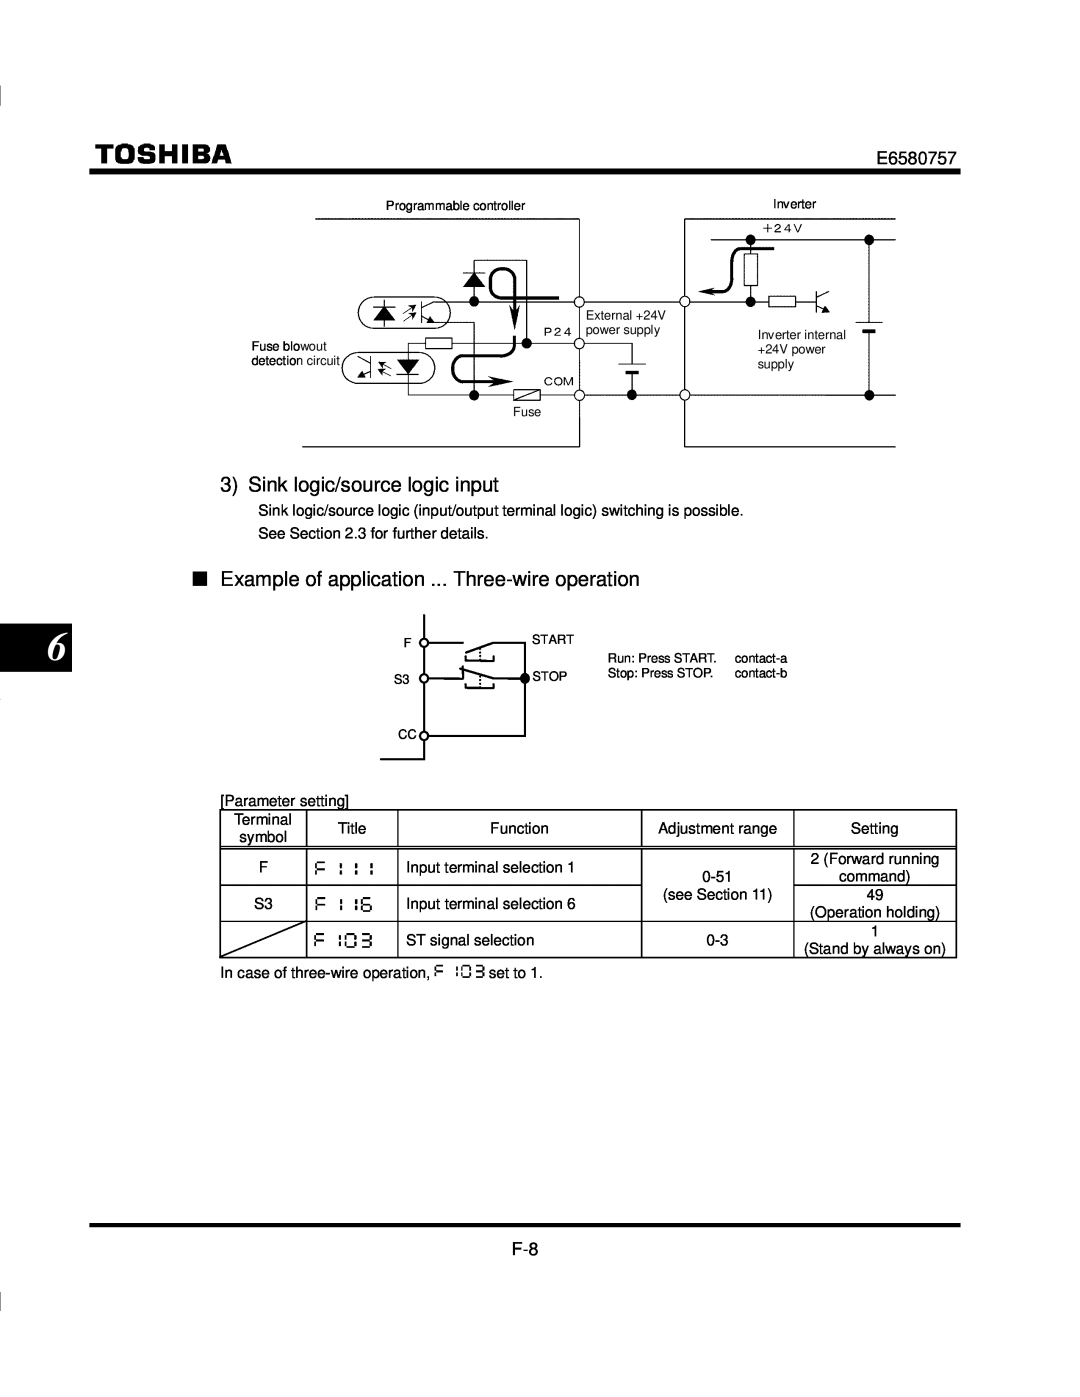 Toshiba VF-S9 manual Sink logic/source logic input, Example of application ... Three-wire operation, Inverter internal 